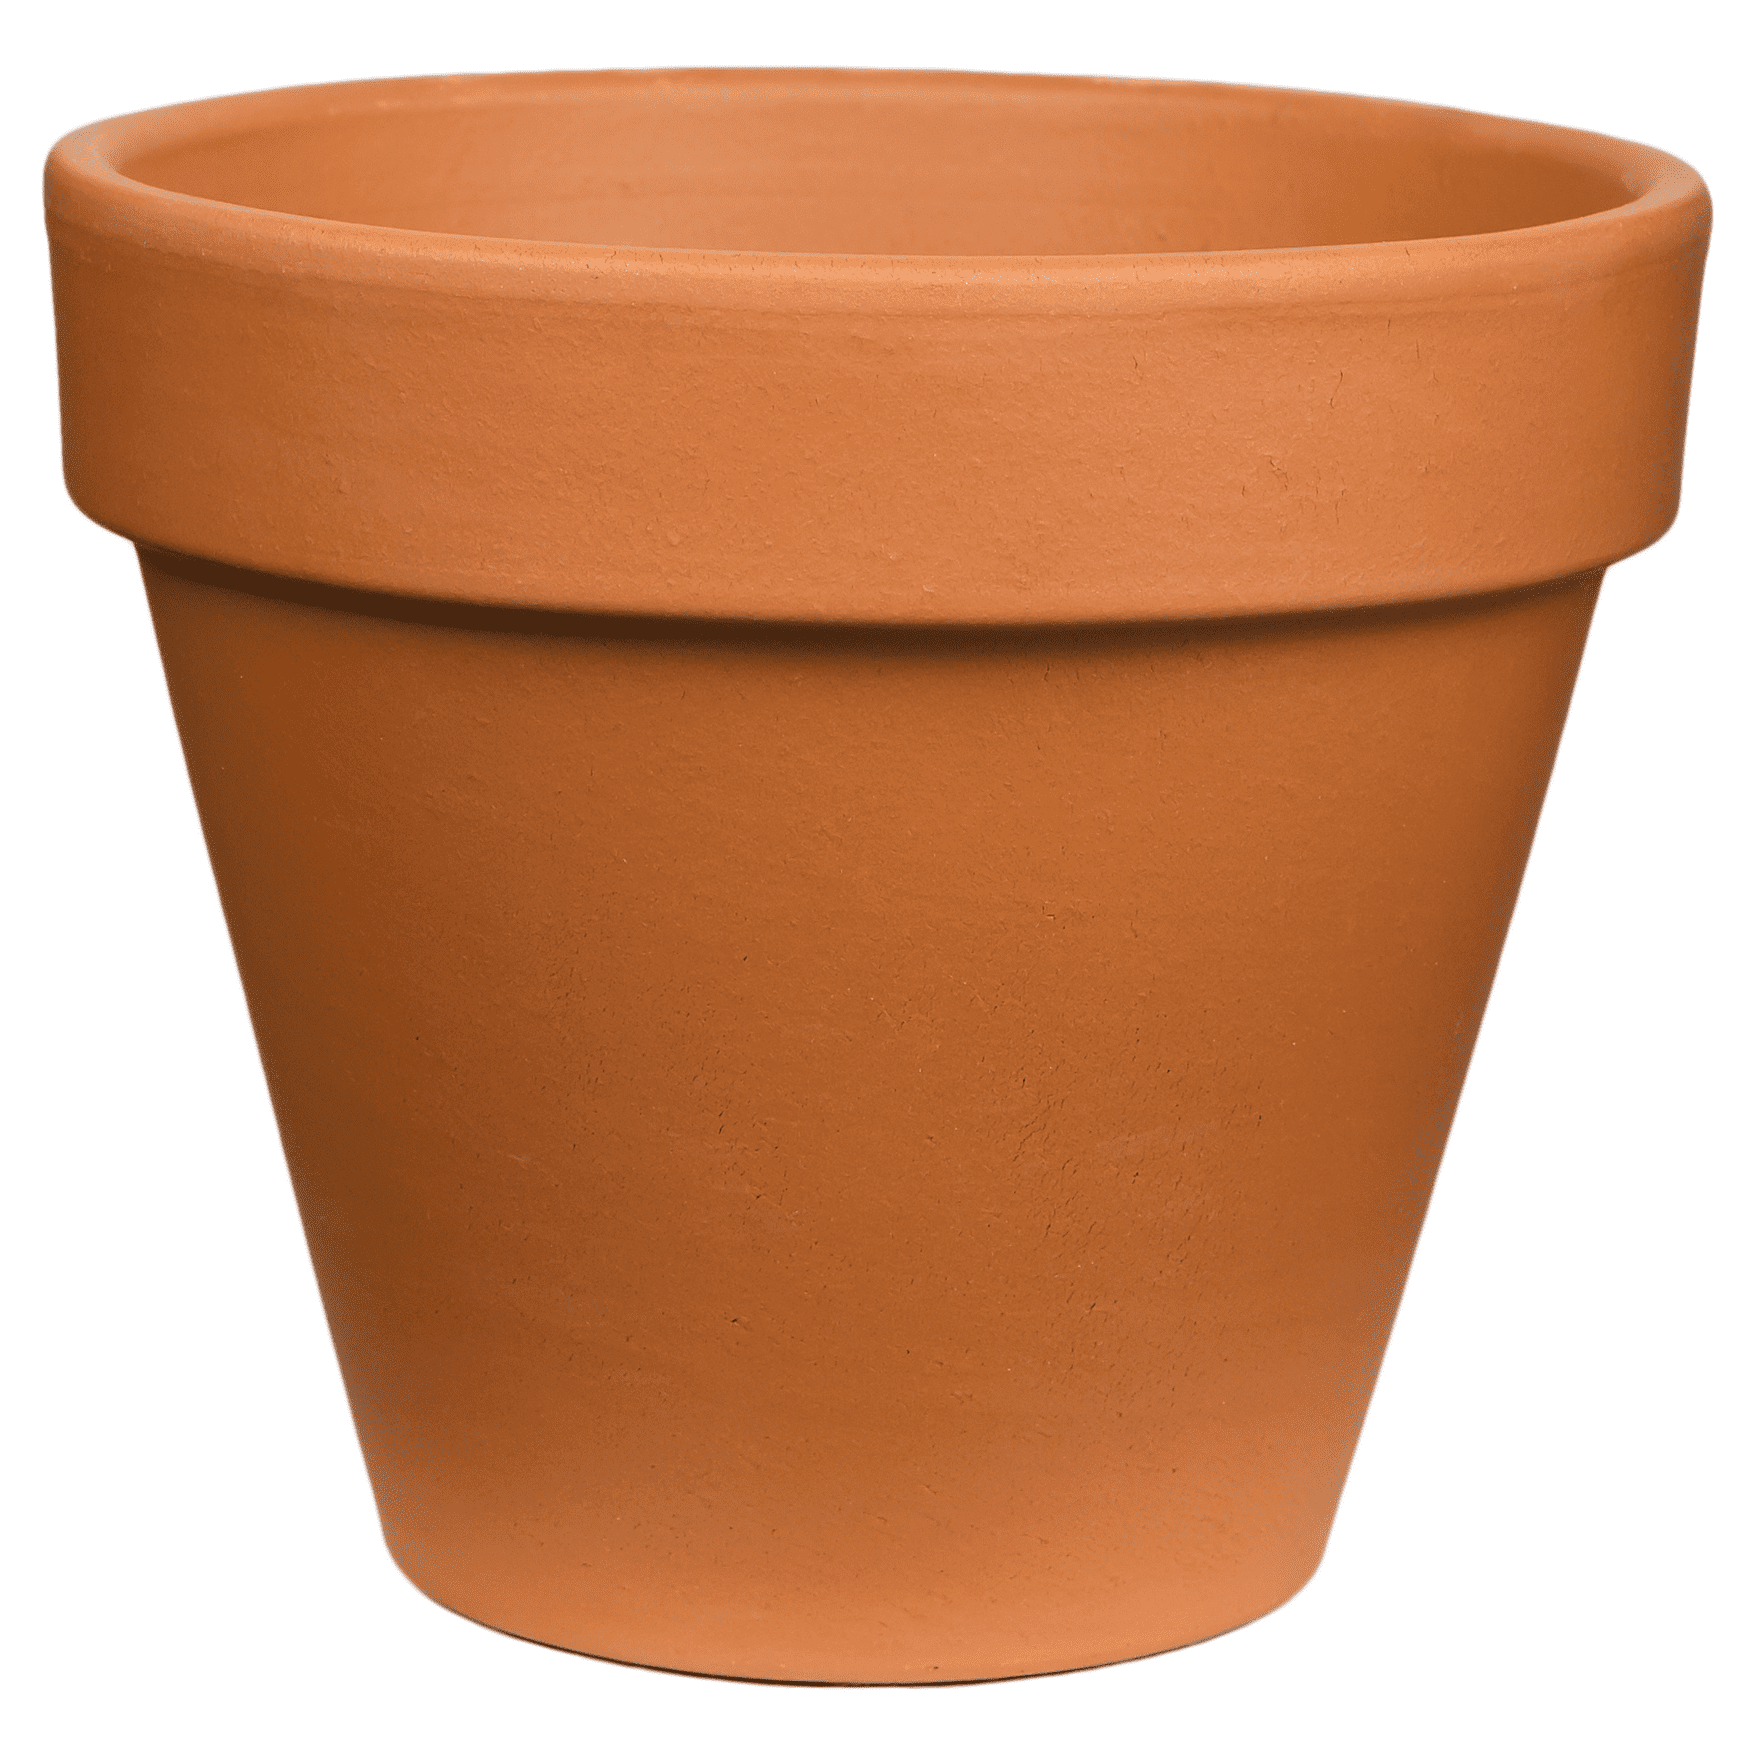 Clay pot - 6-inch